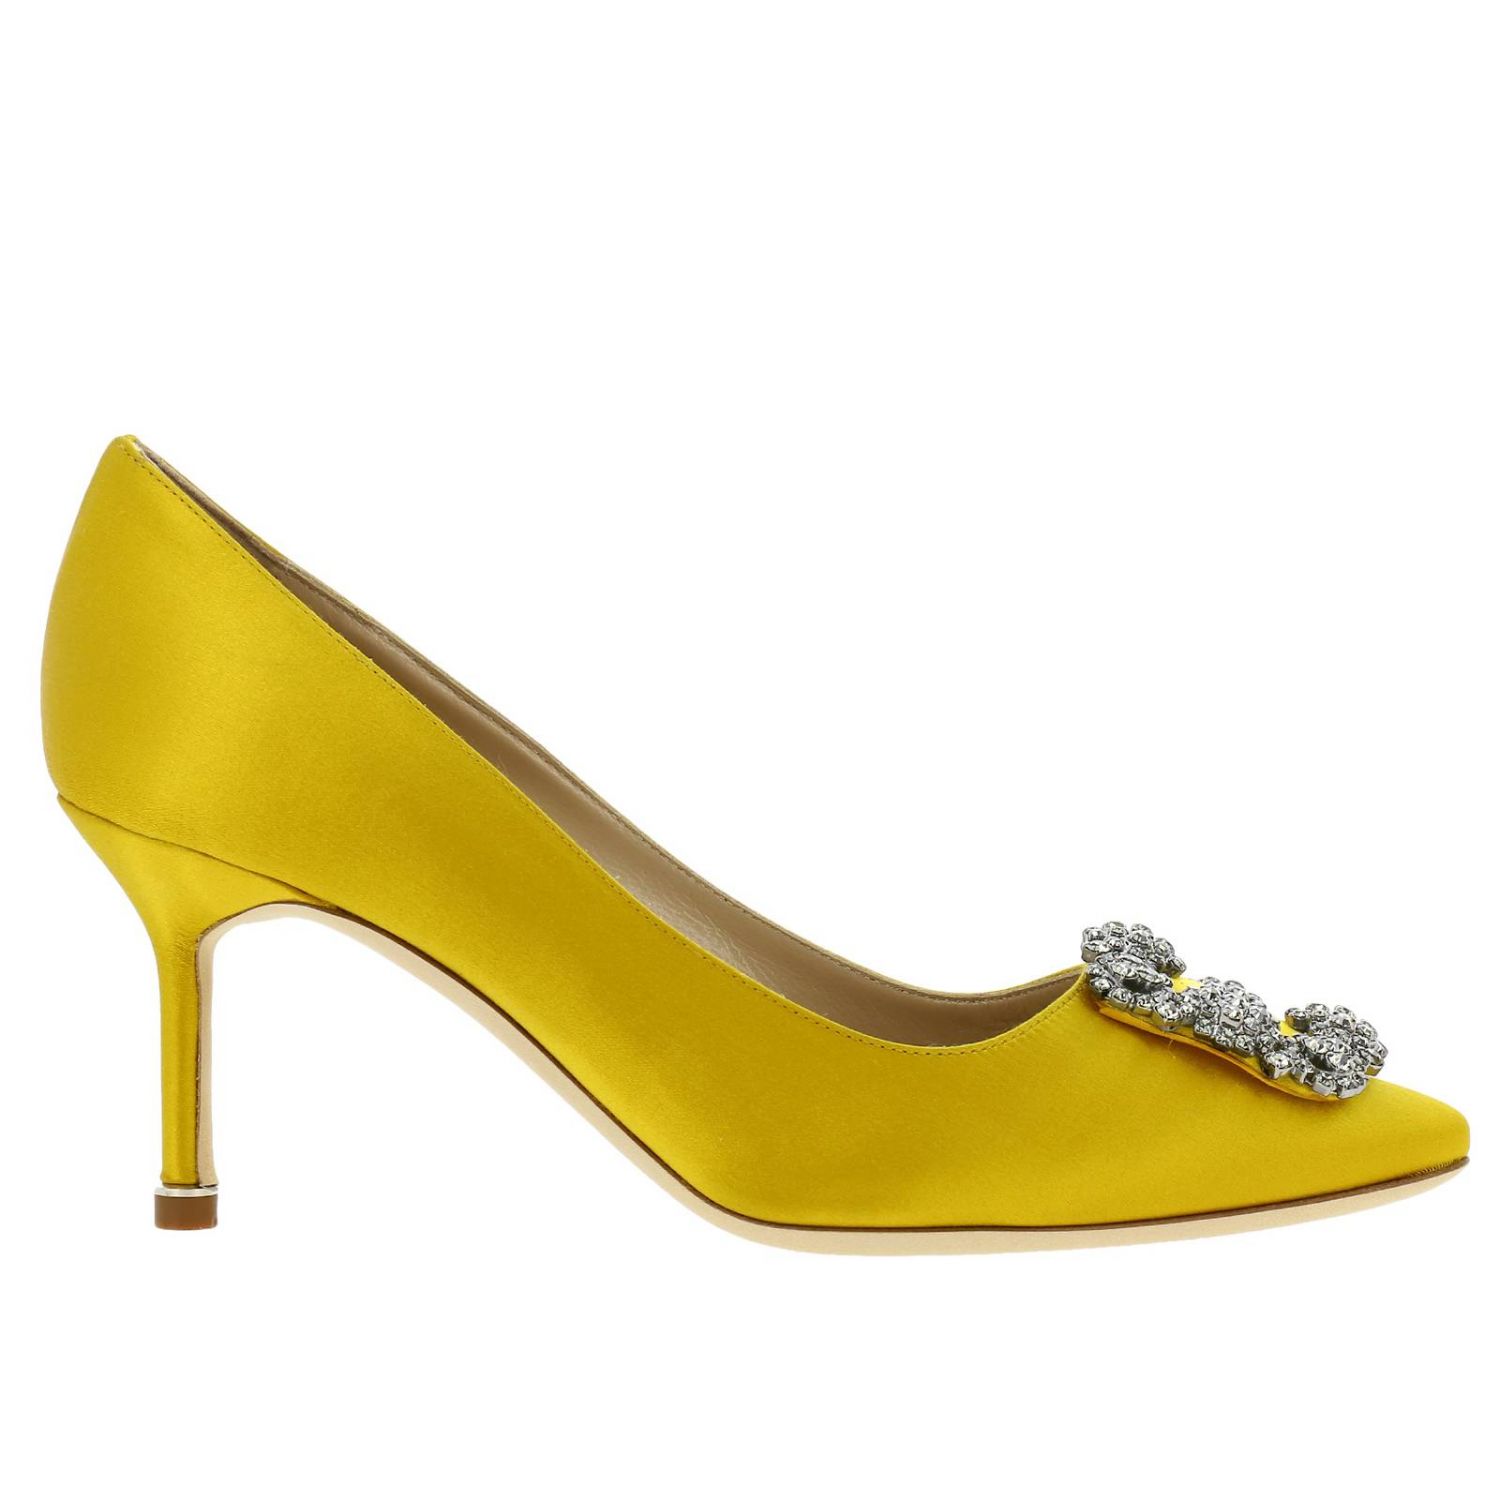 yellow manolo blahnik shoes